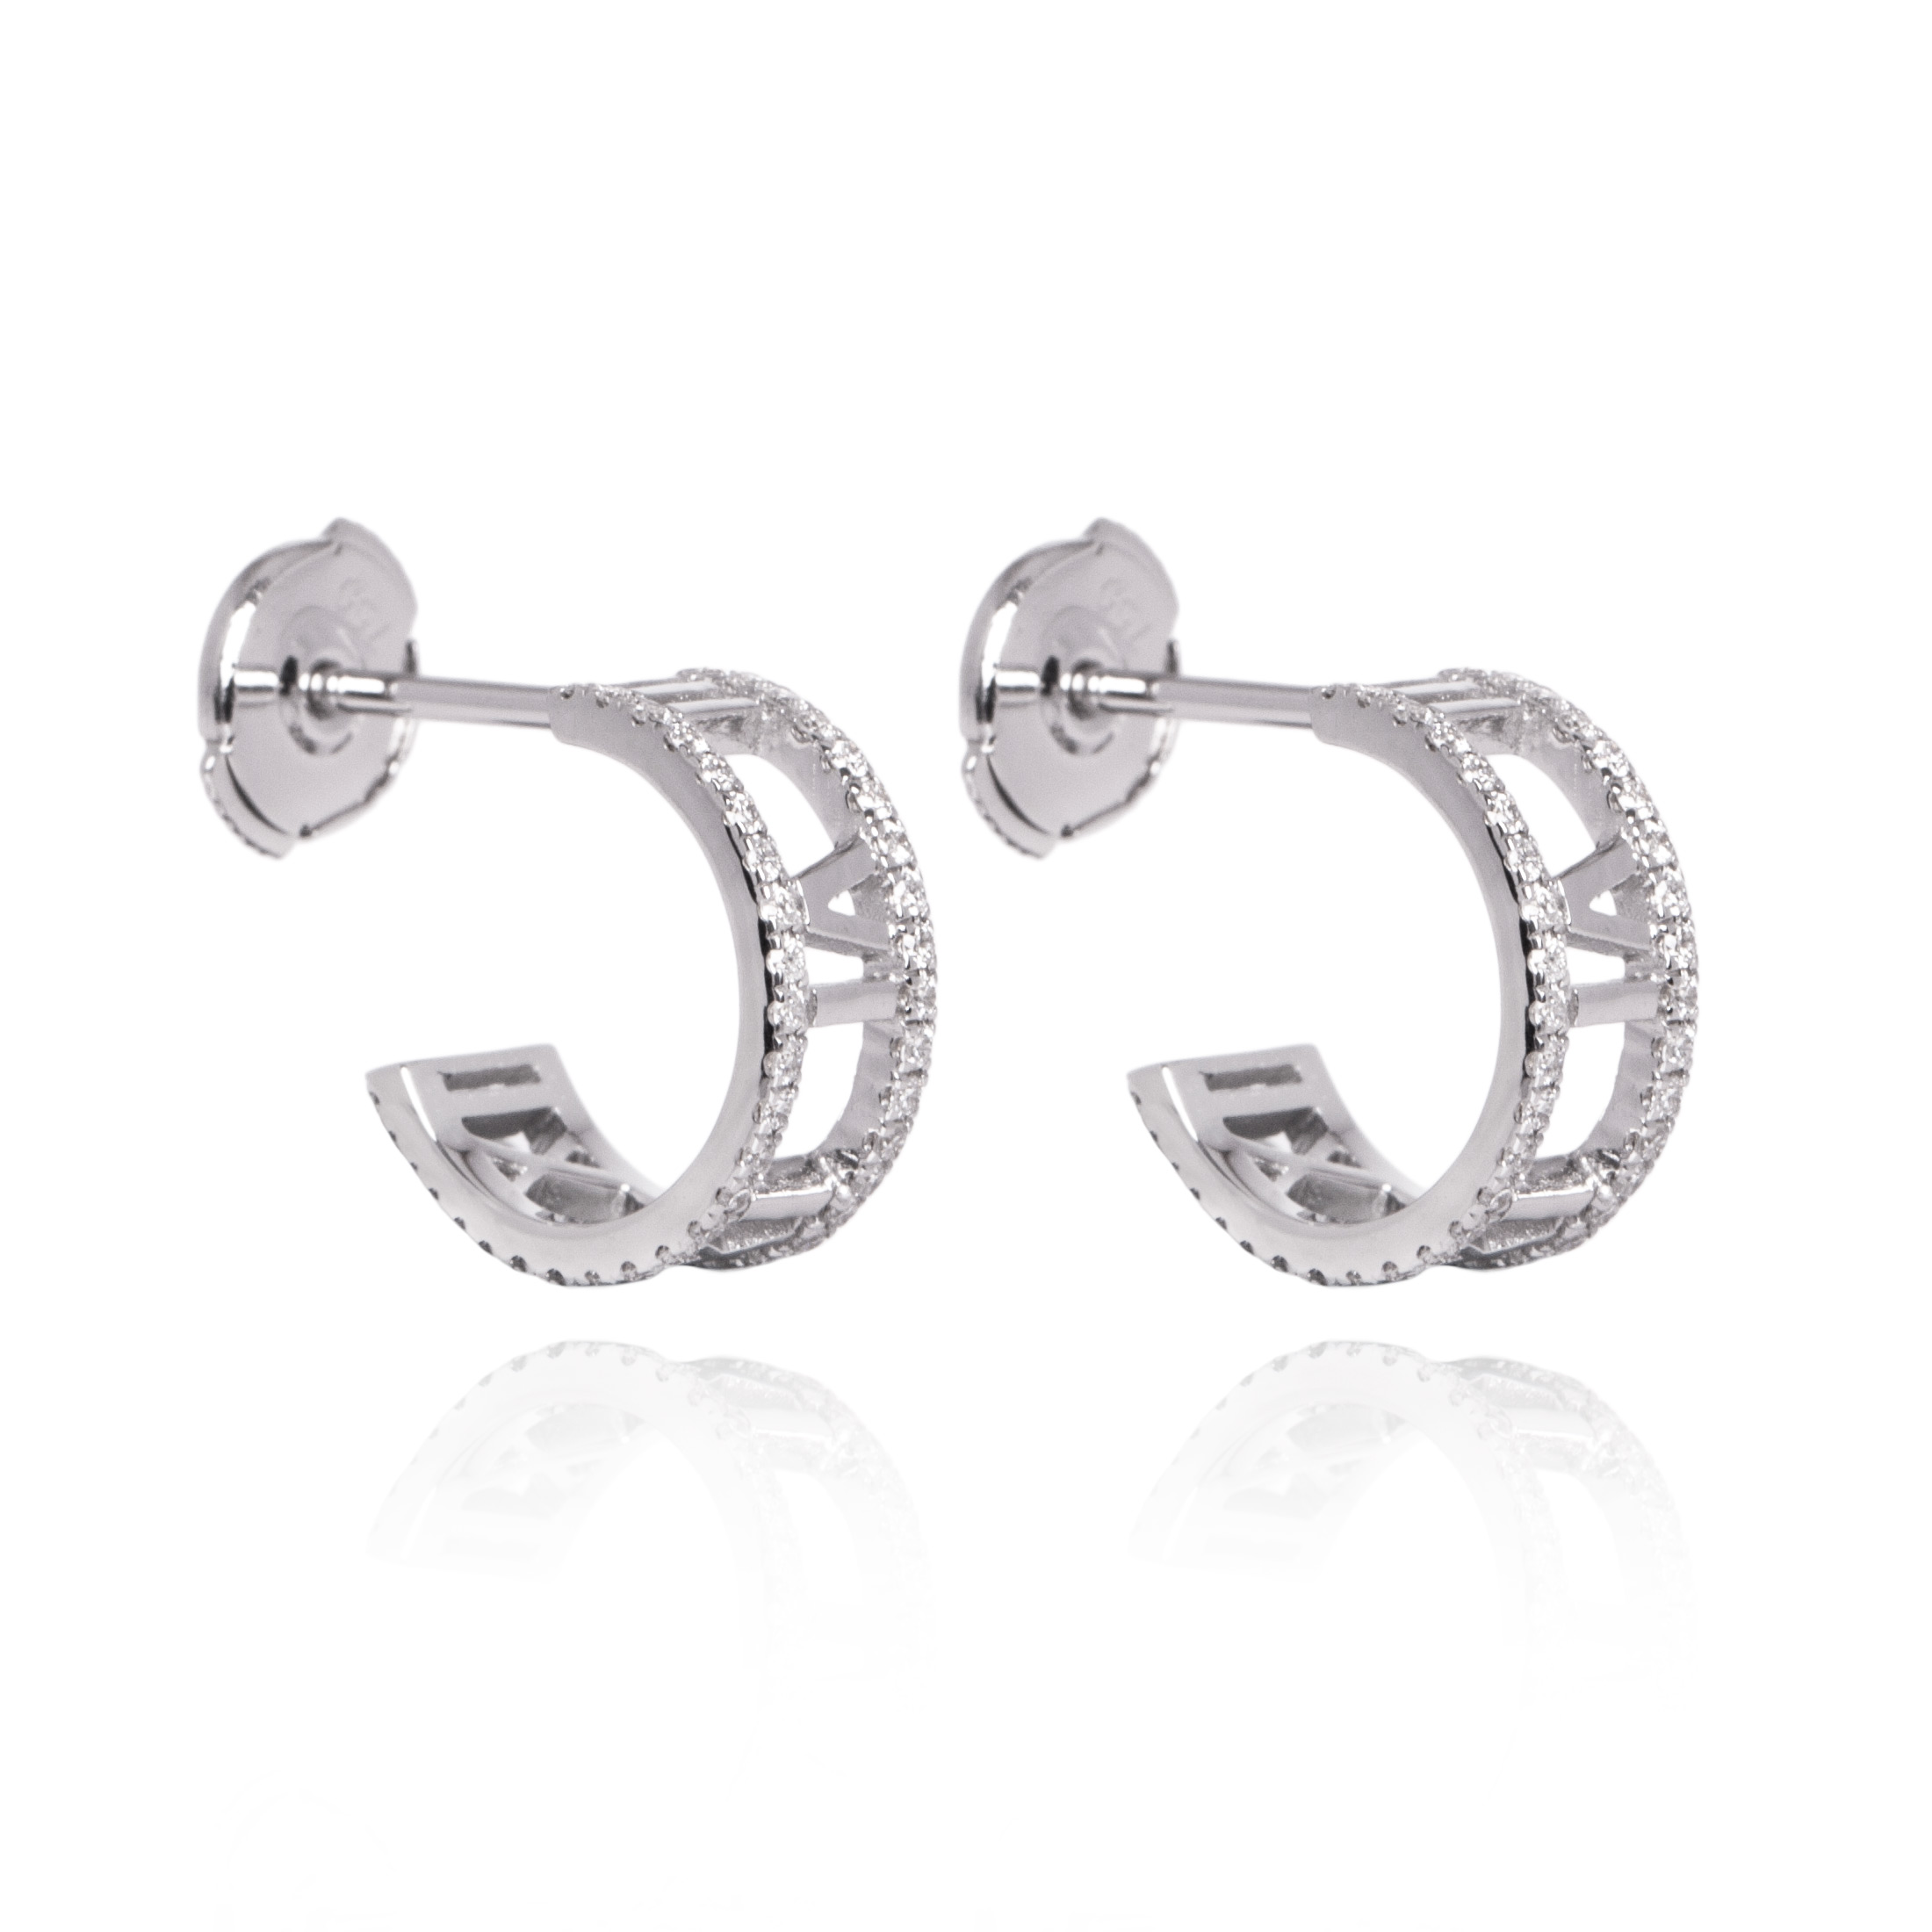 177-continental-jewels-manufacturers-earrings-cje000177-18k-white-gold-vvs1-diamonds-roman-numerals-customised-earrings.jpg